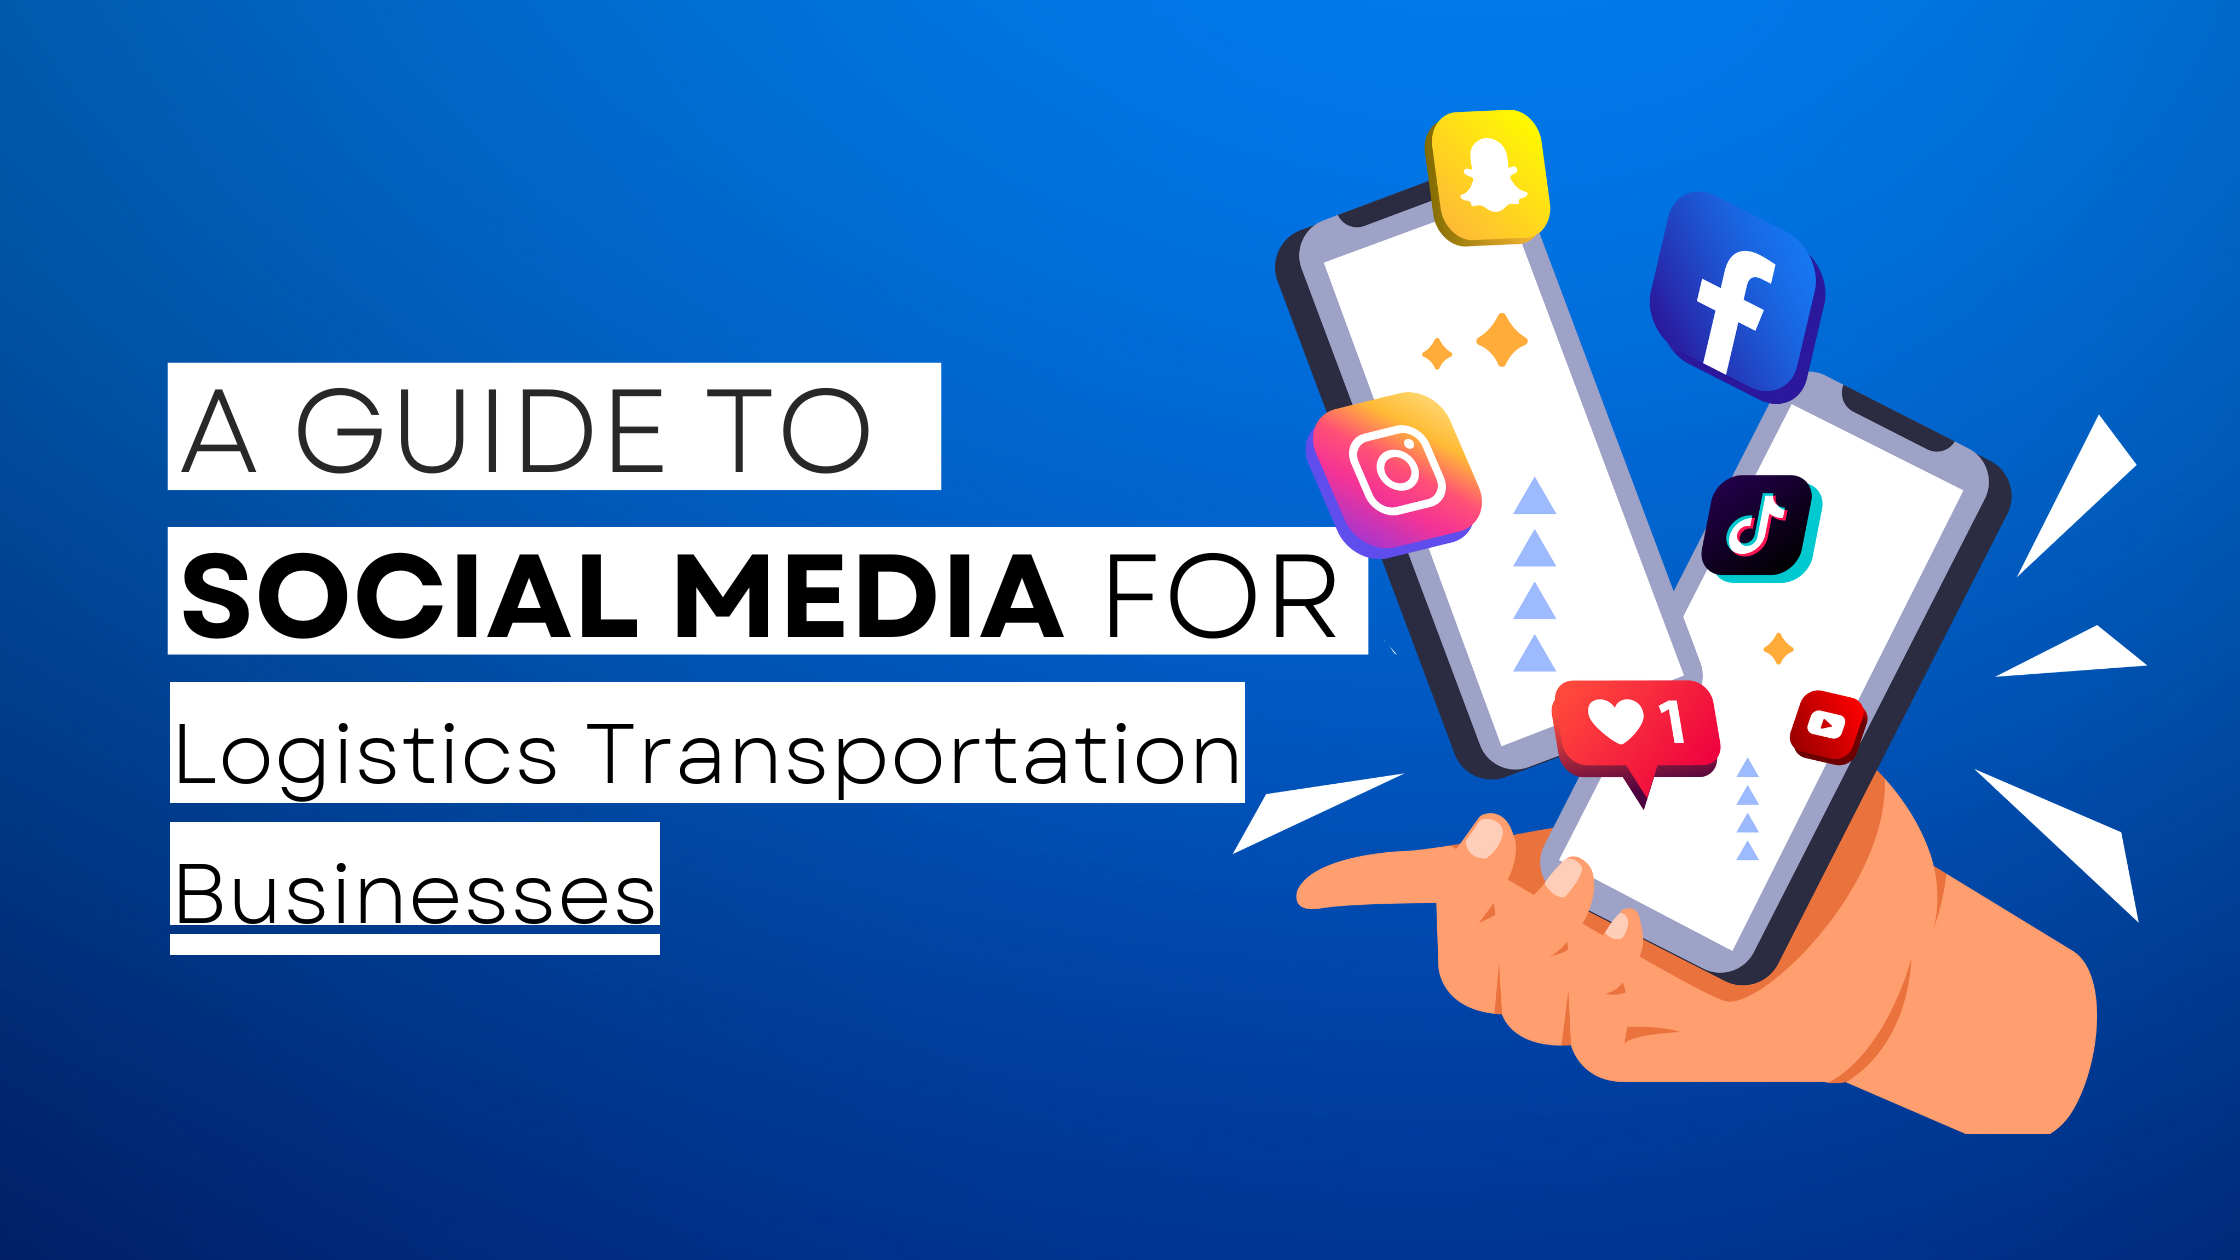 How to start Logistics Transportation on social media